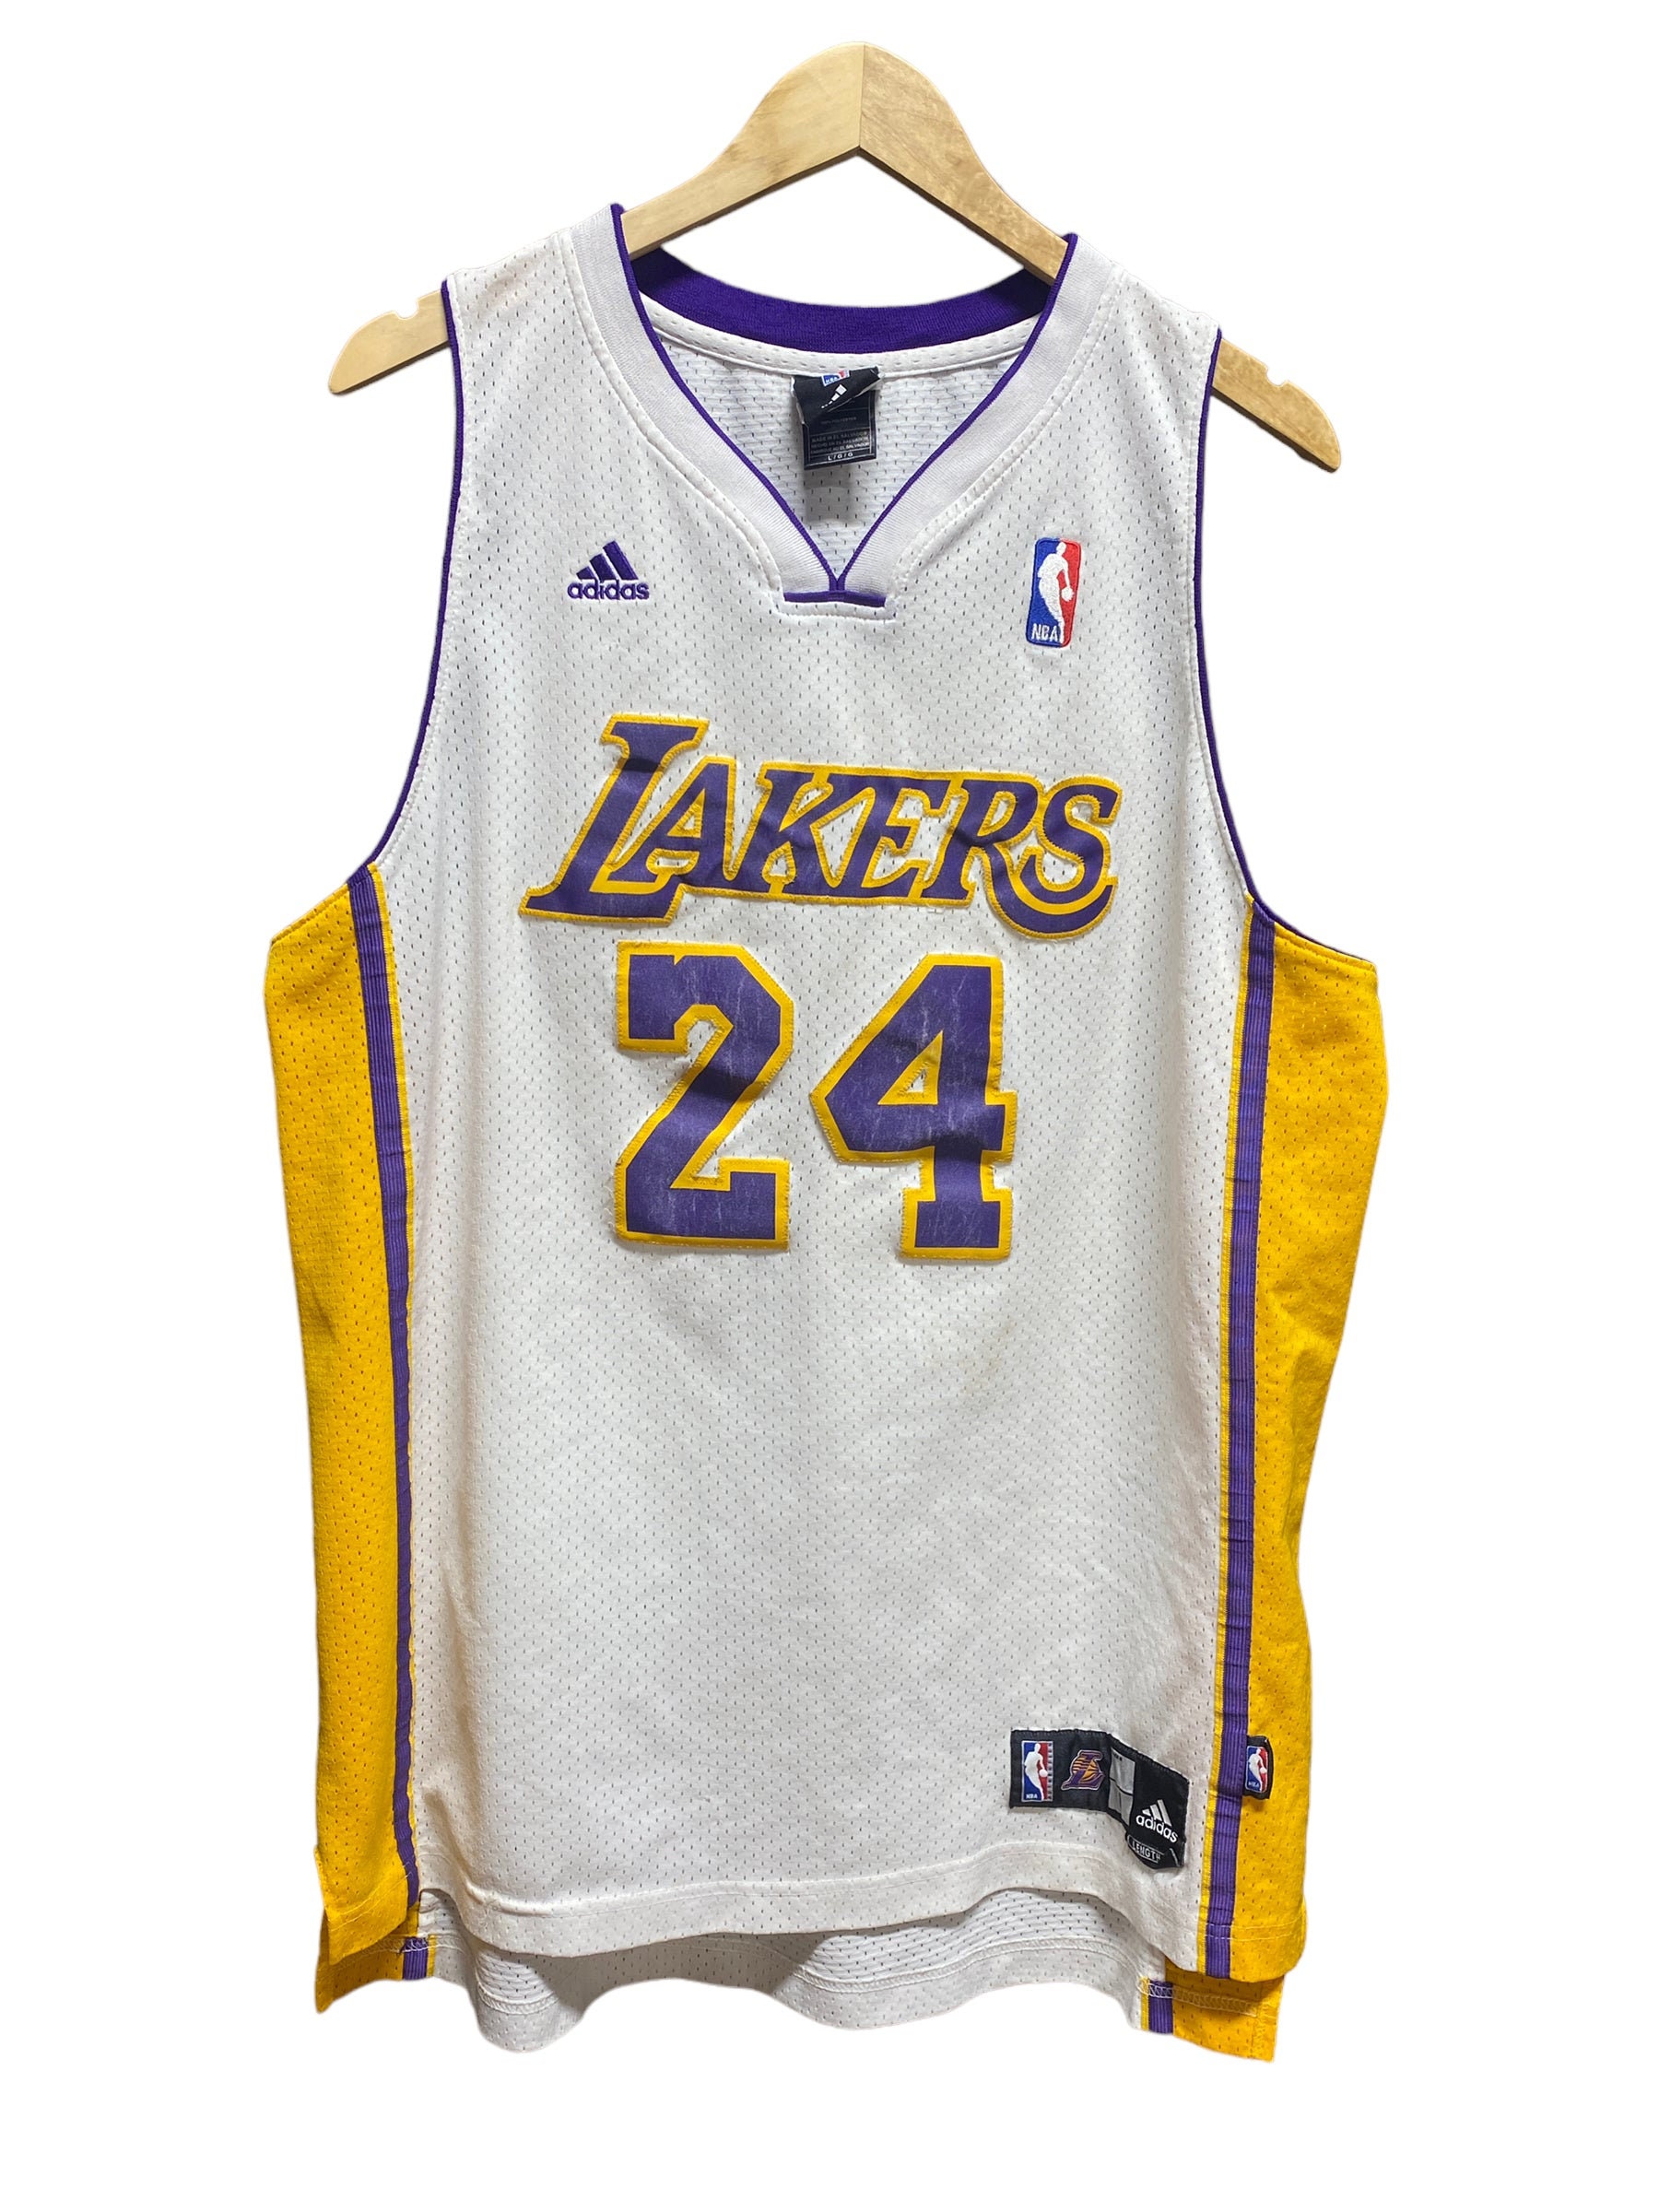 adidas, Shirts, Vintage La Lakers Kobe Bryant Jersey Tshirt